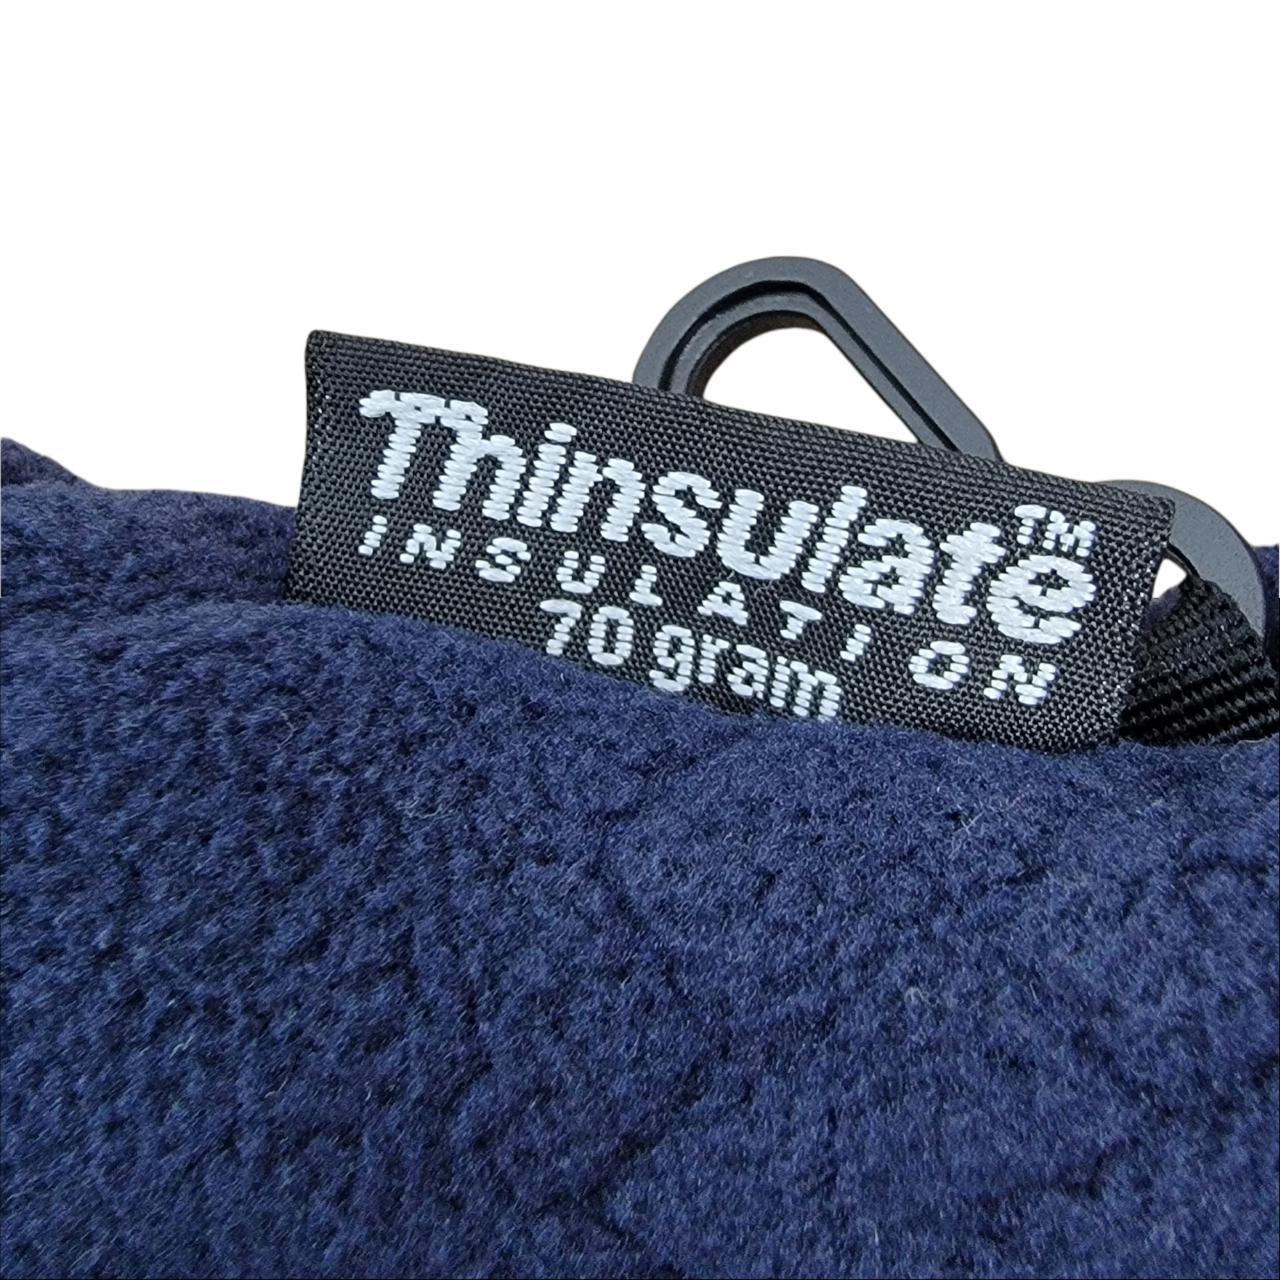 Product Image 3 - Blue Fleece Gloves Unisex Adult